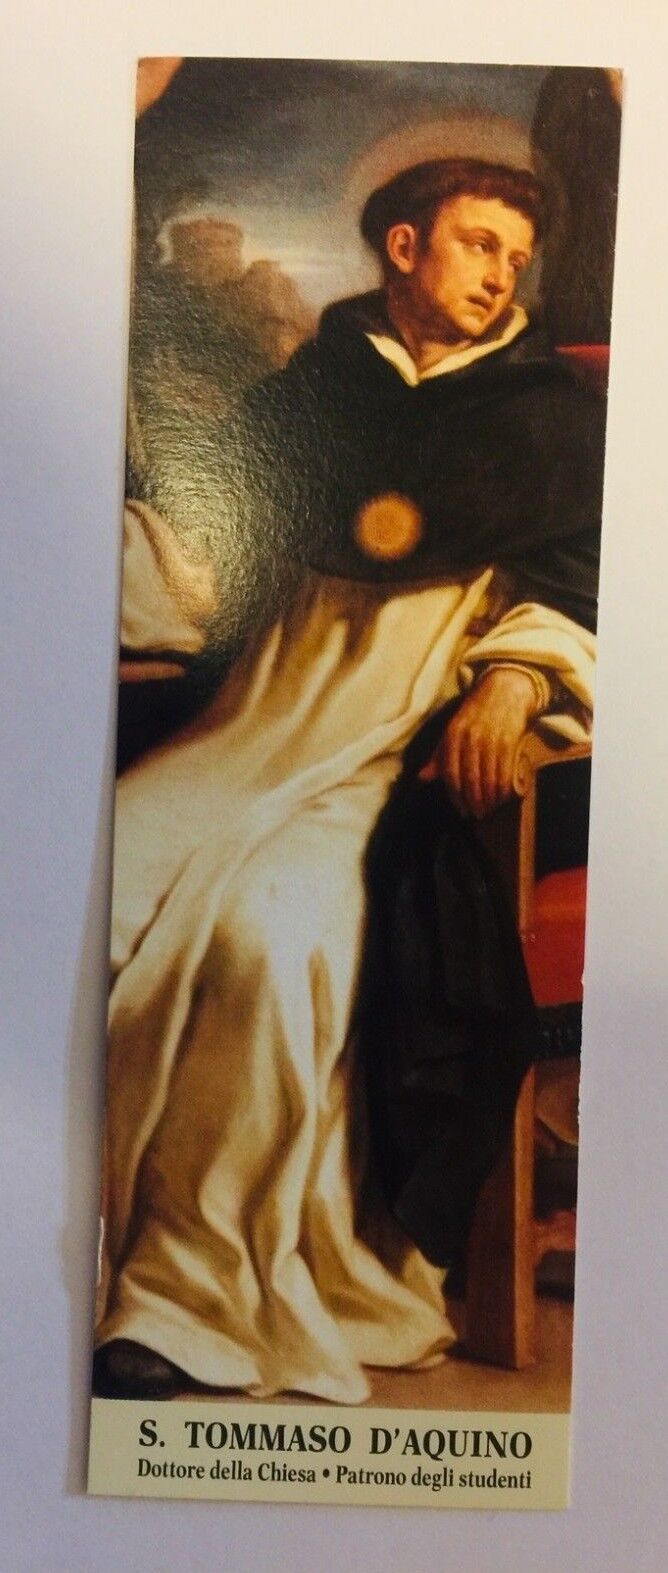 Saint Thomas Aquinas Authentic Prayer Card, PRAYER IN ITALIAN, New From Italy - Bob and Penny Lord